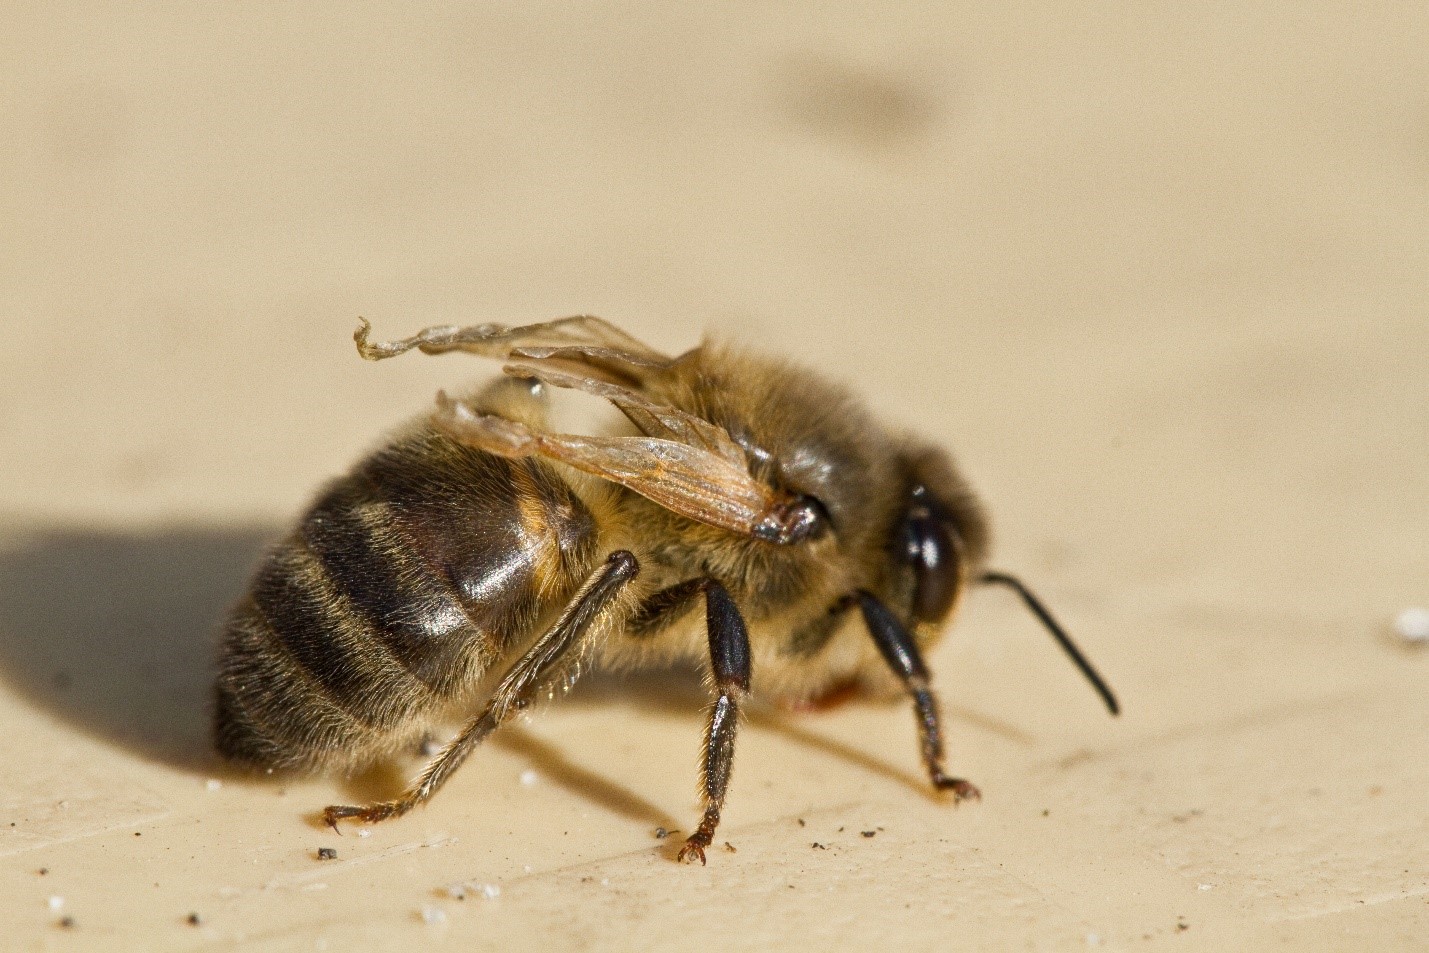 honey bee worker symptomatic for DWV